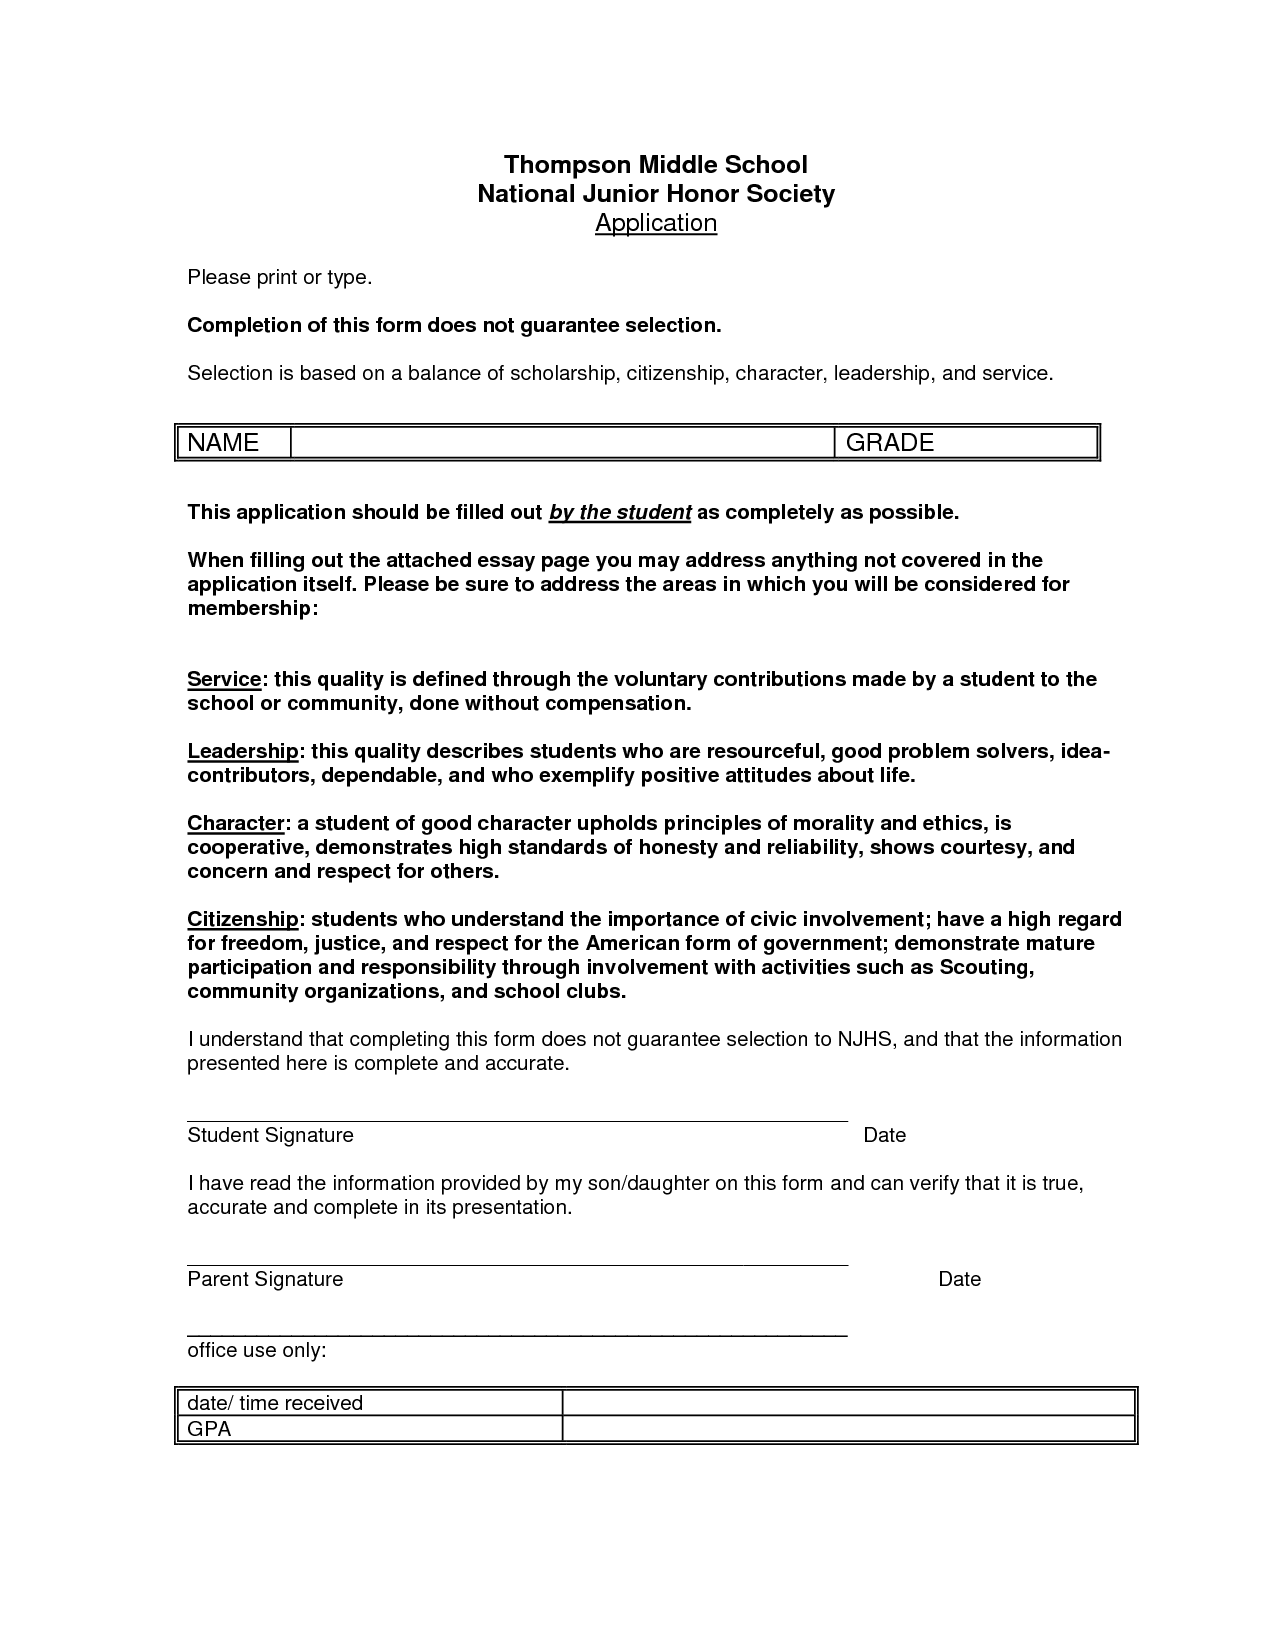 National Junior Honor Society Application Essay Sample